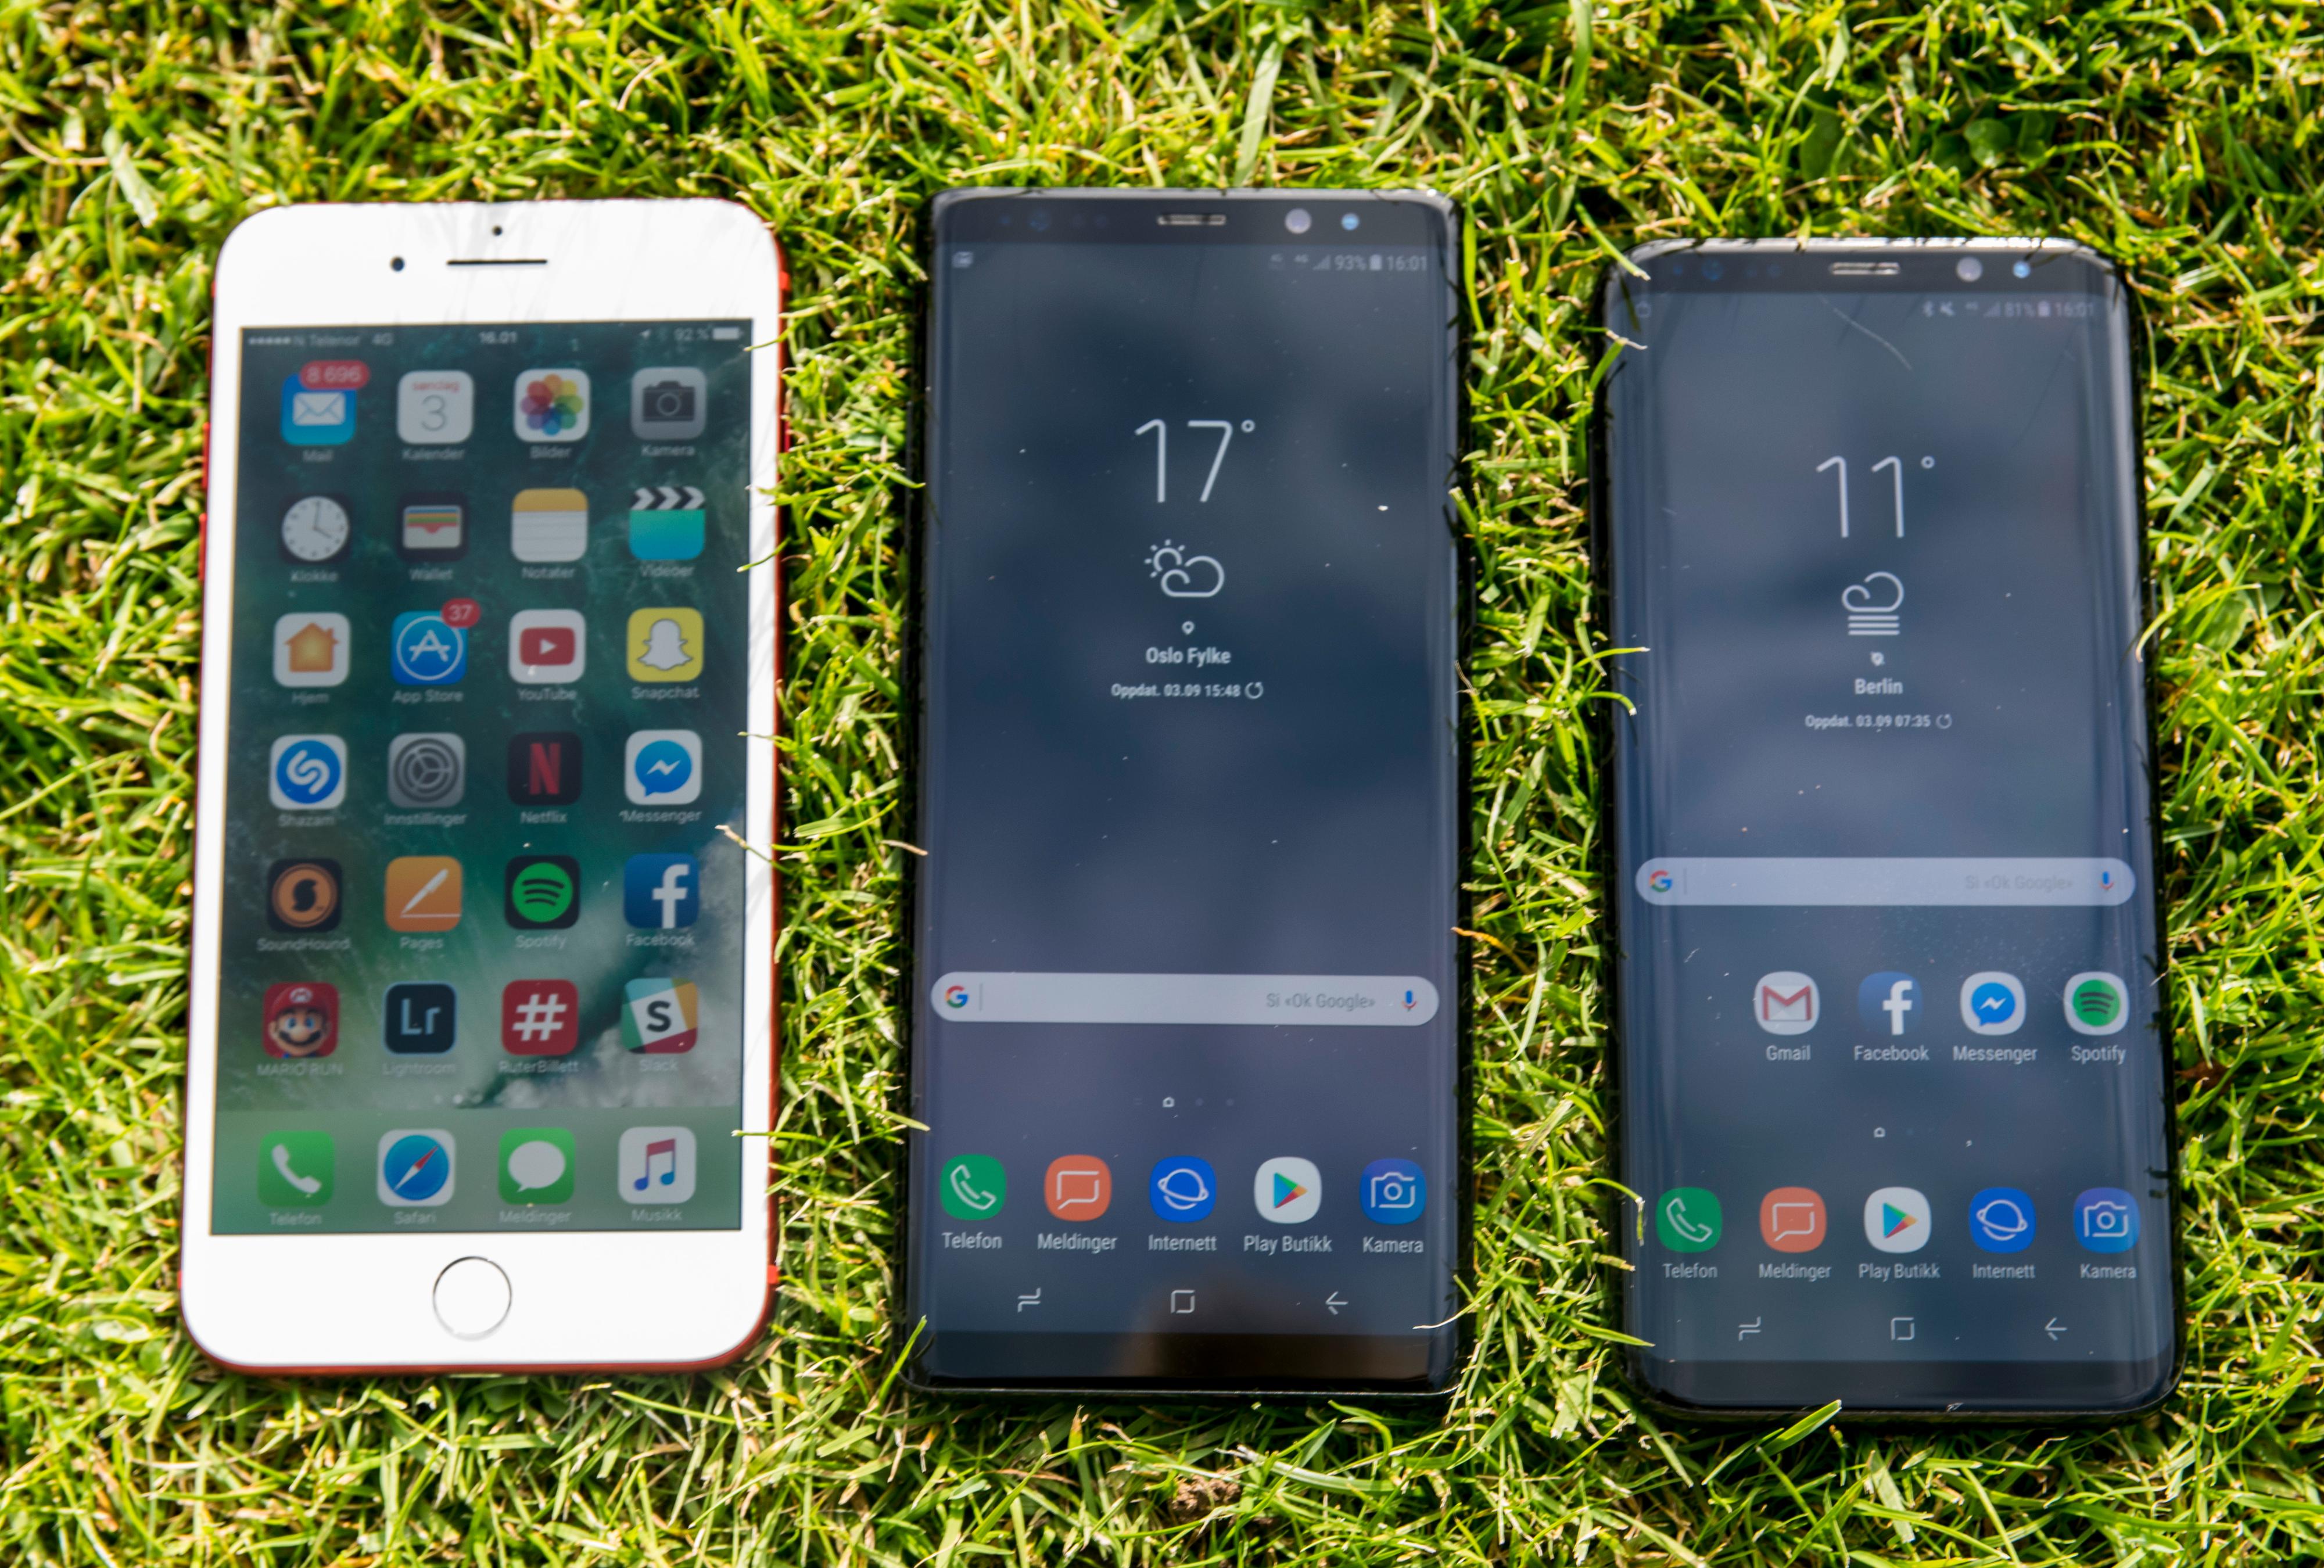 Fra venstre: iPhone 7 Plus, Galaxy Note 8 og Galaxy S8+. Alle er store mobiler.